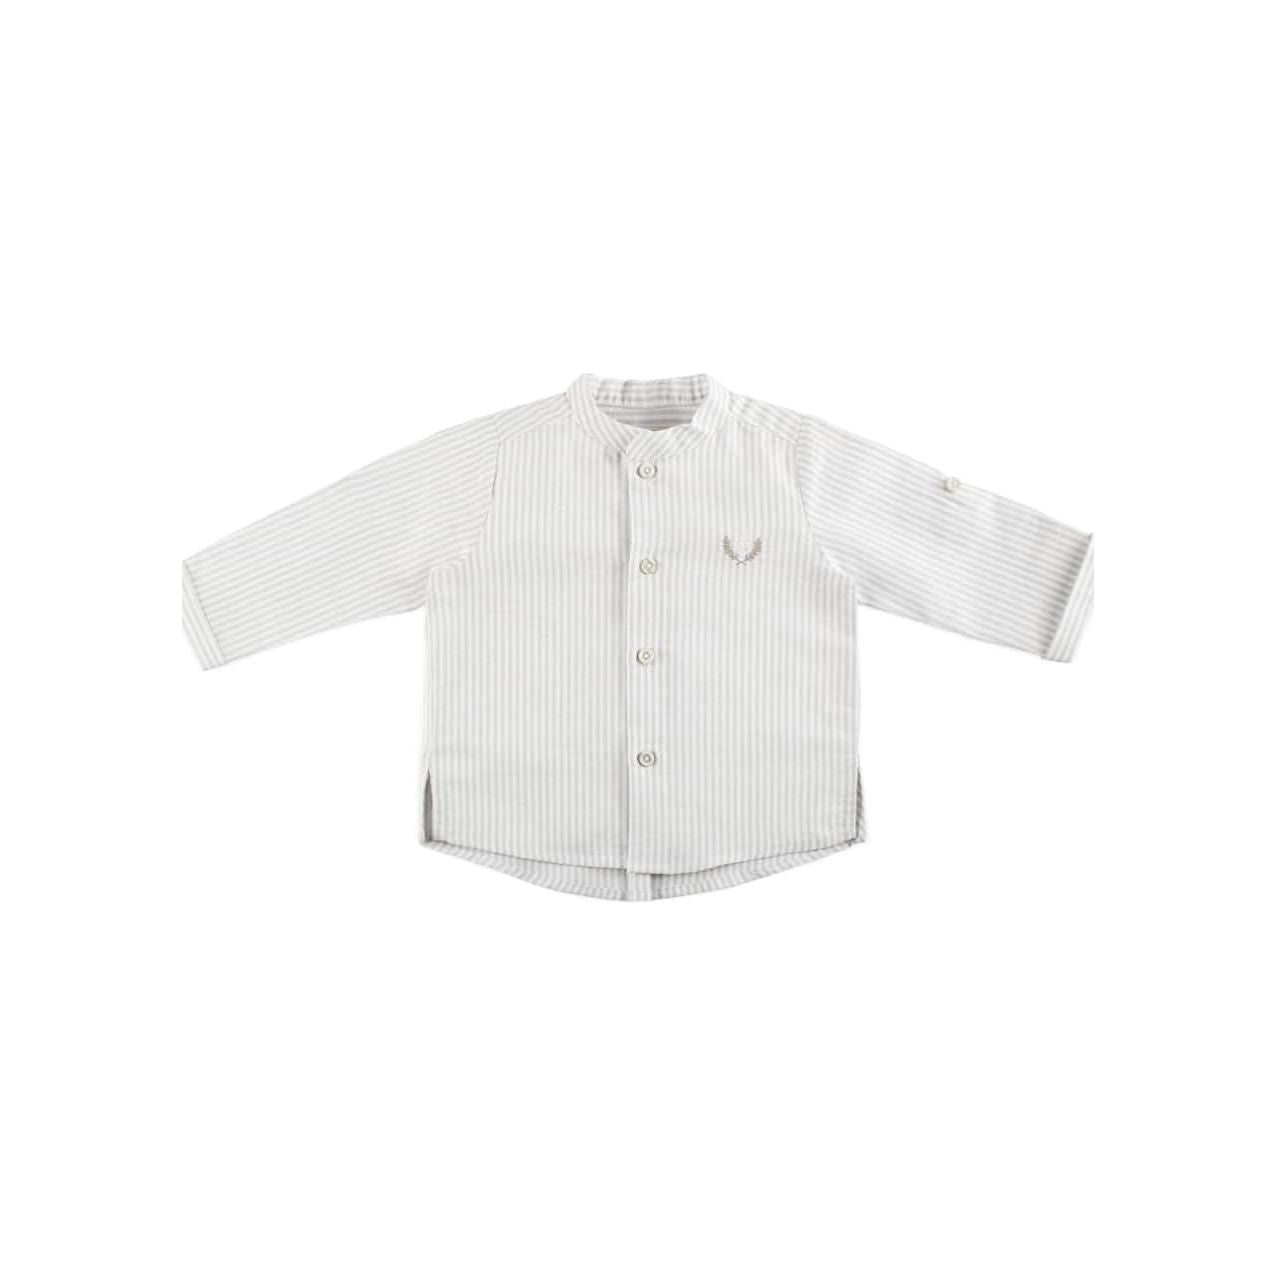 Pili Carrera Gray Striped Button-down Shirt - 12m